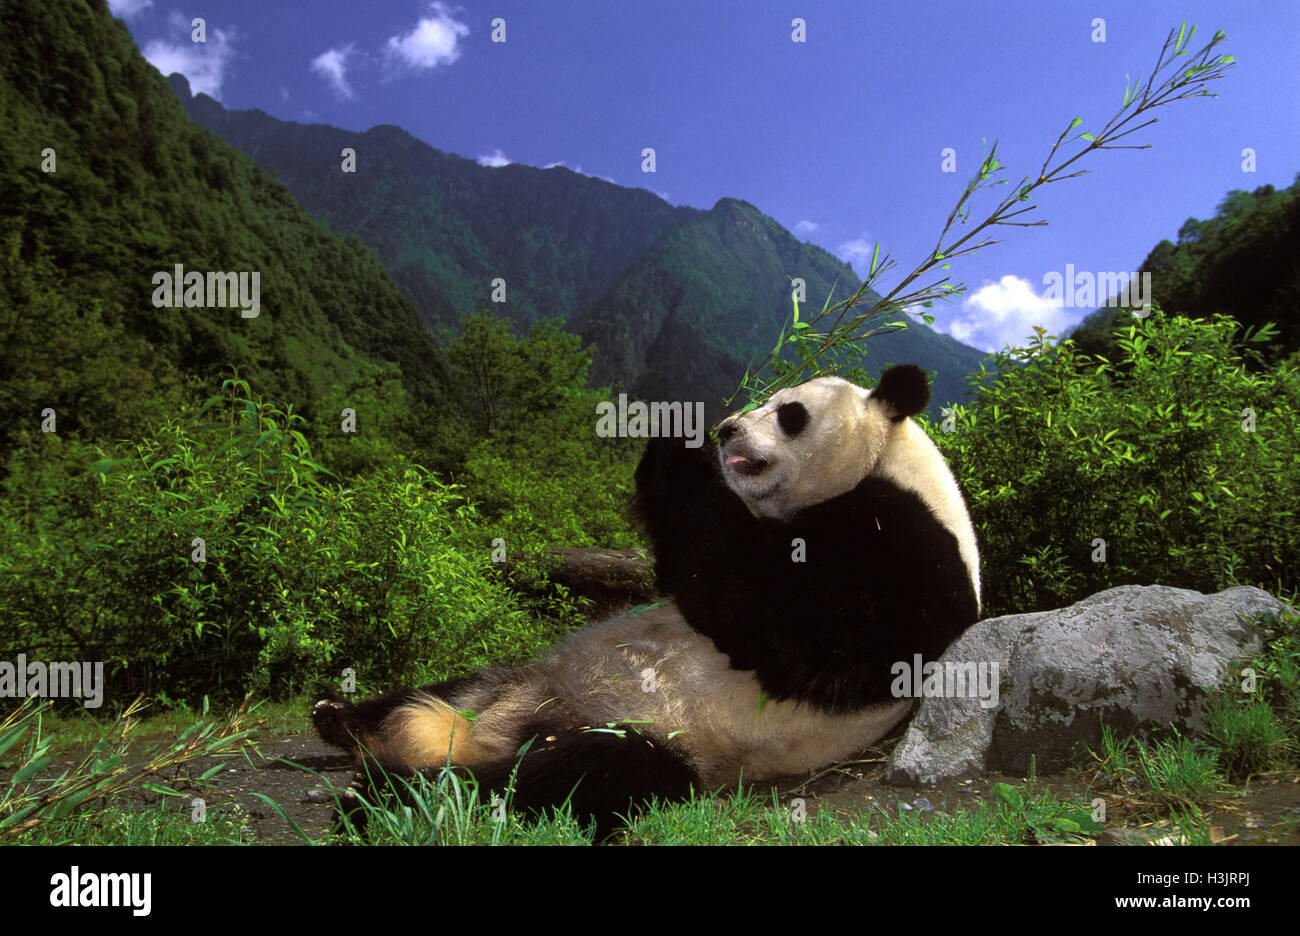 Giant panda habitat fotografías e imágenes de alta resolución - Alamy